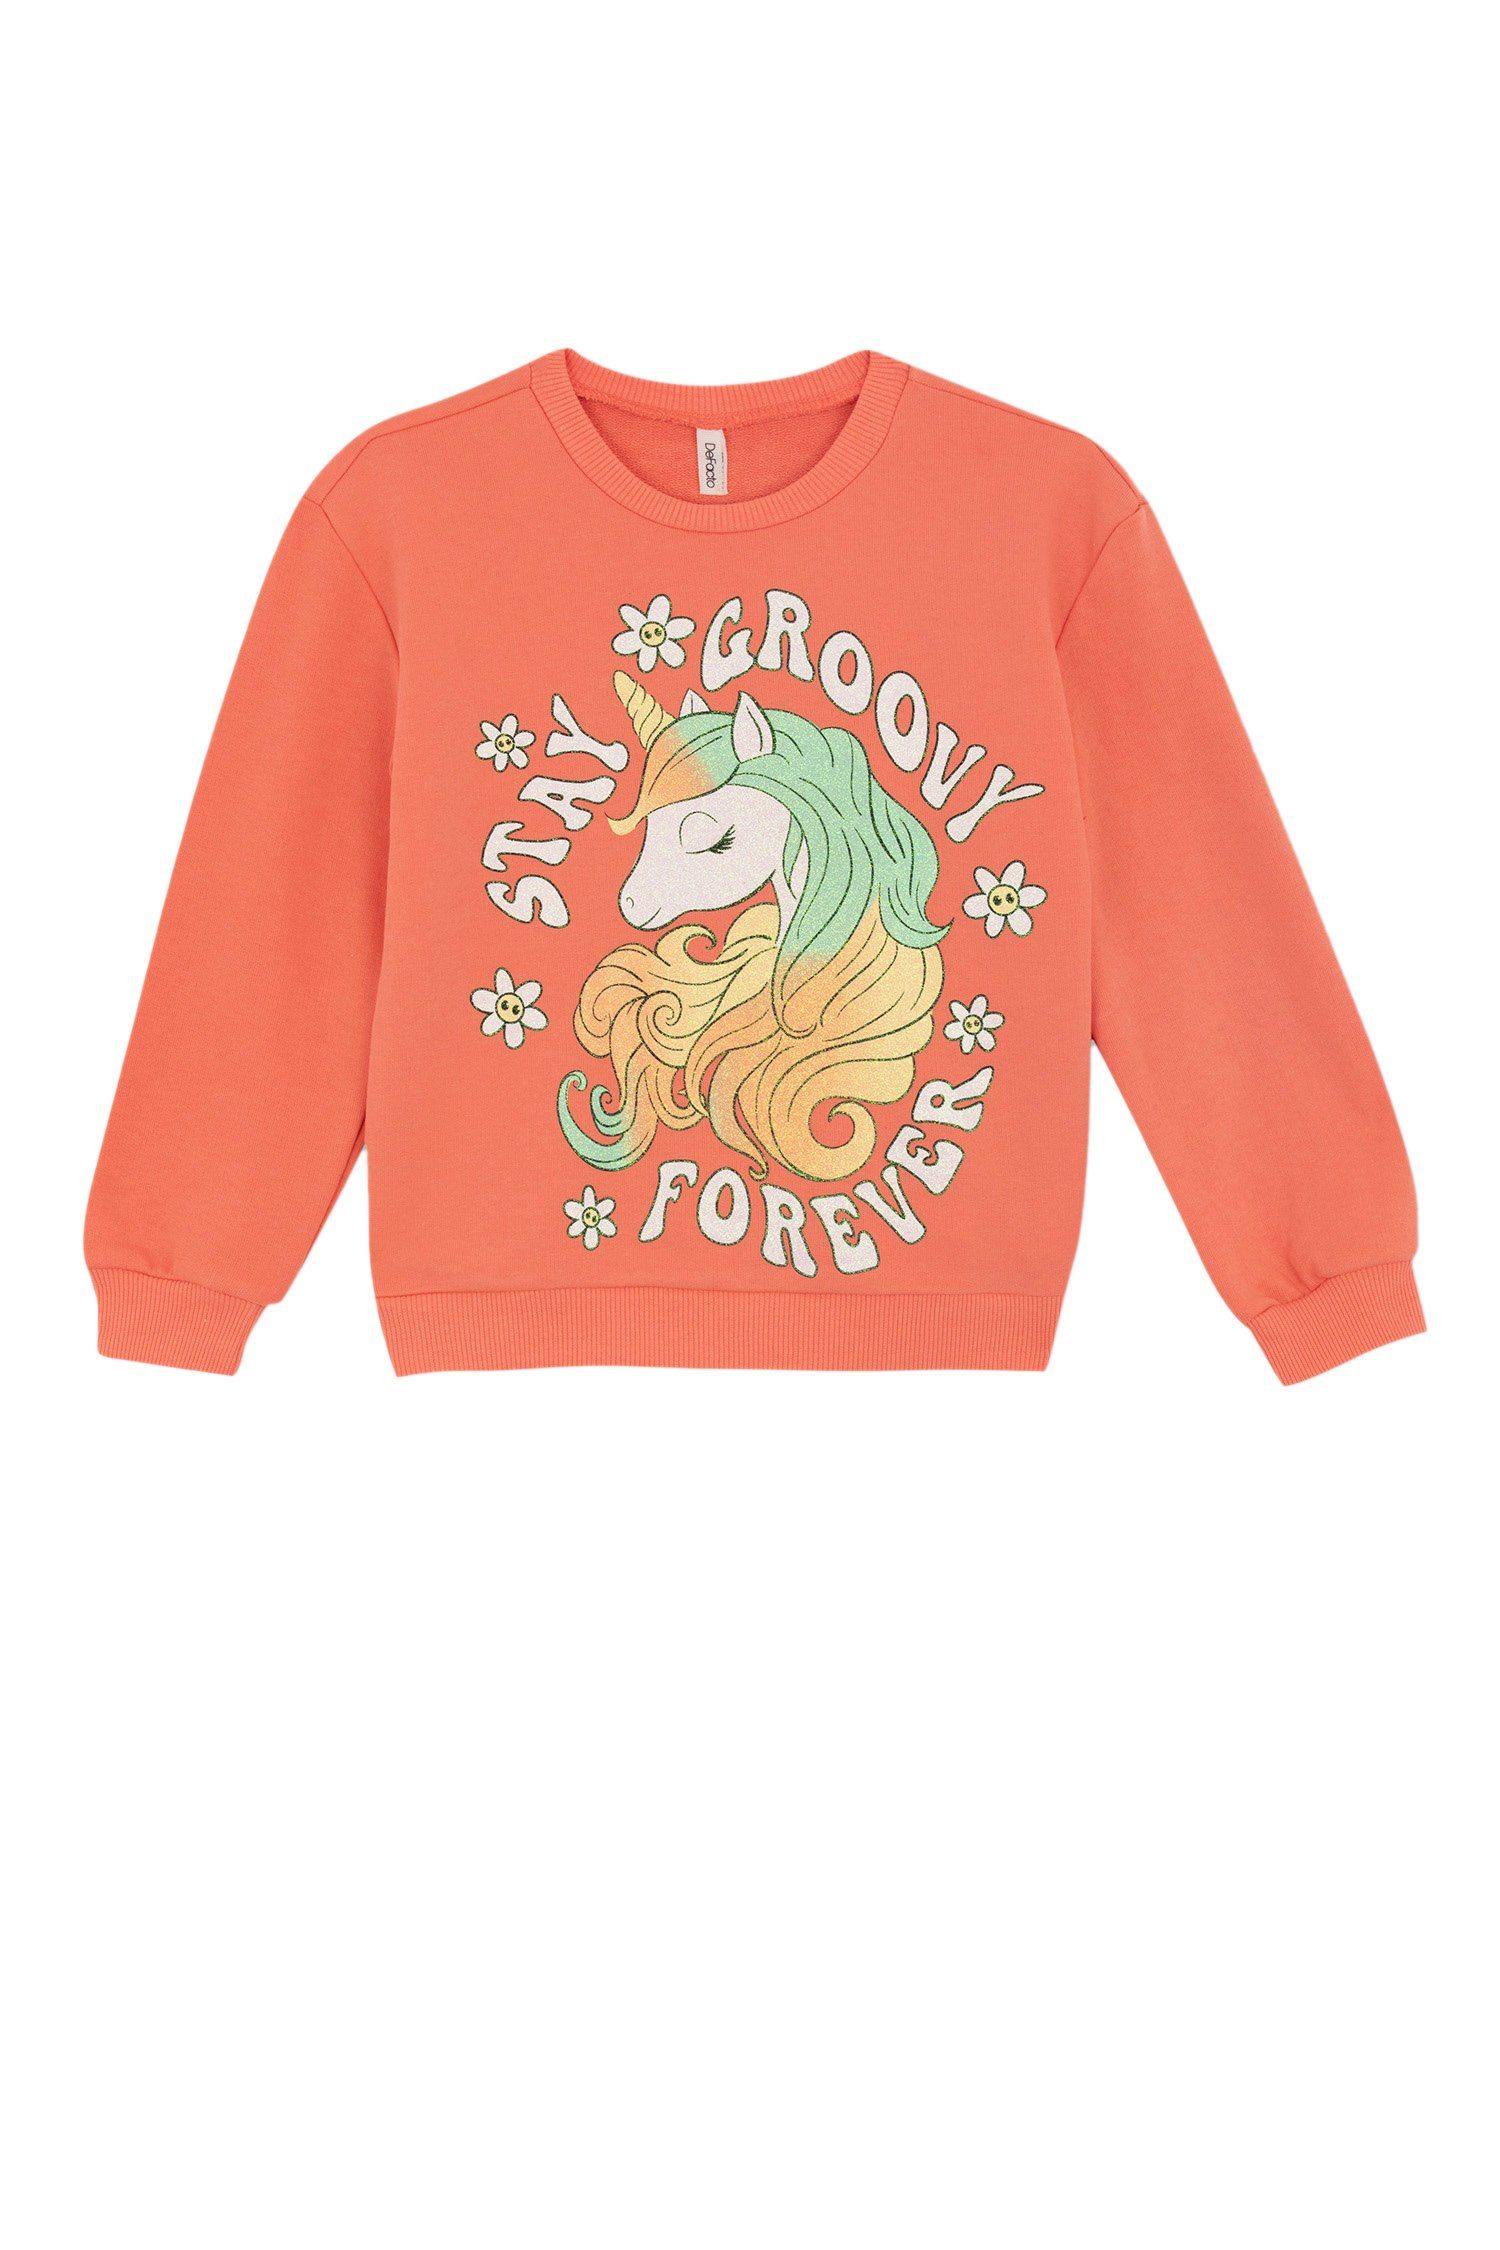 DeFacto Sweatshirt Mädchen Sweatshirt Unicorn REGULAR FIT